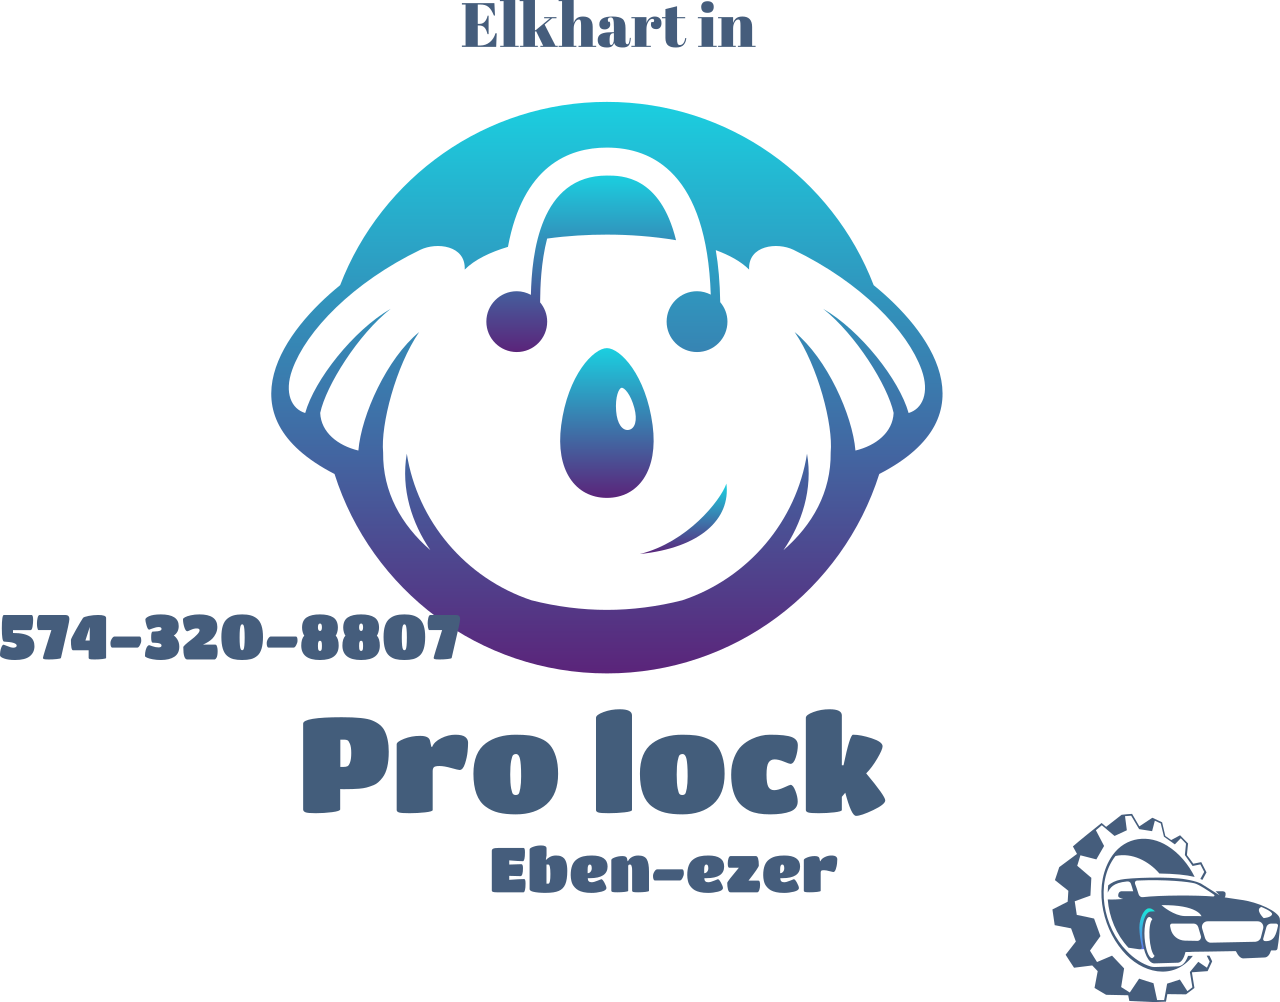 Pro lock 's logo